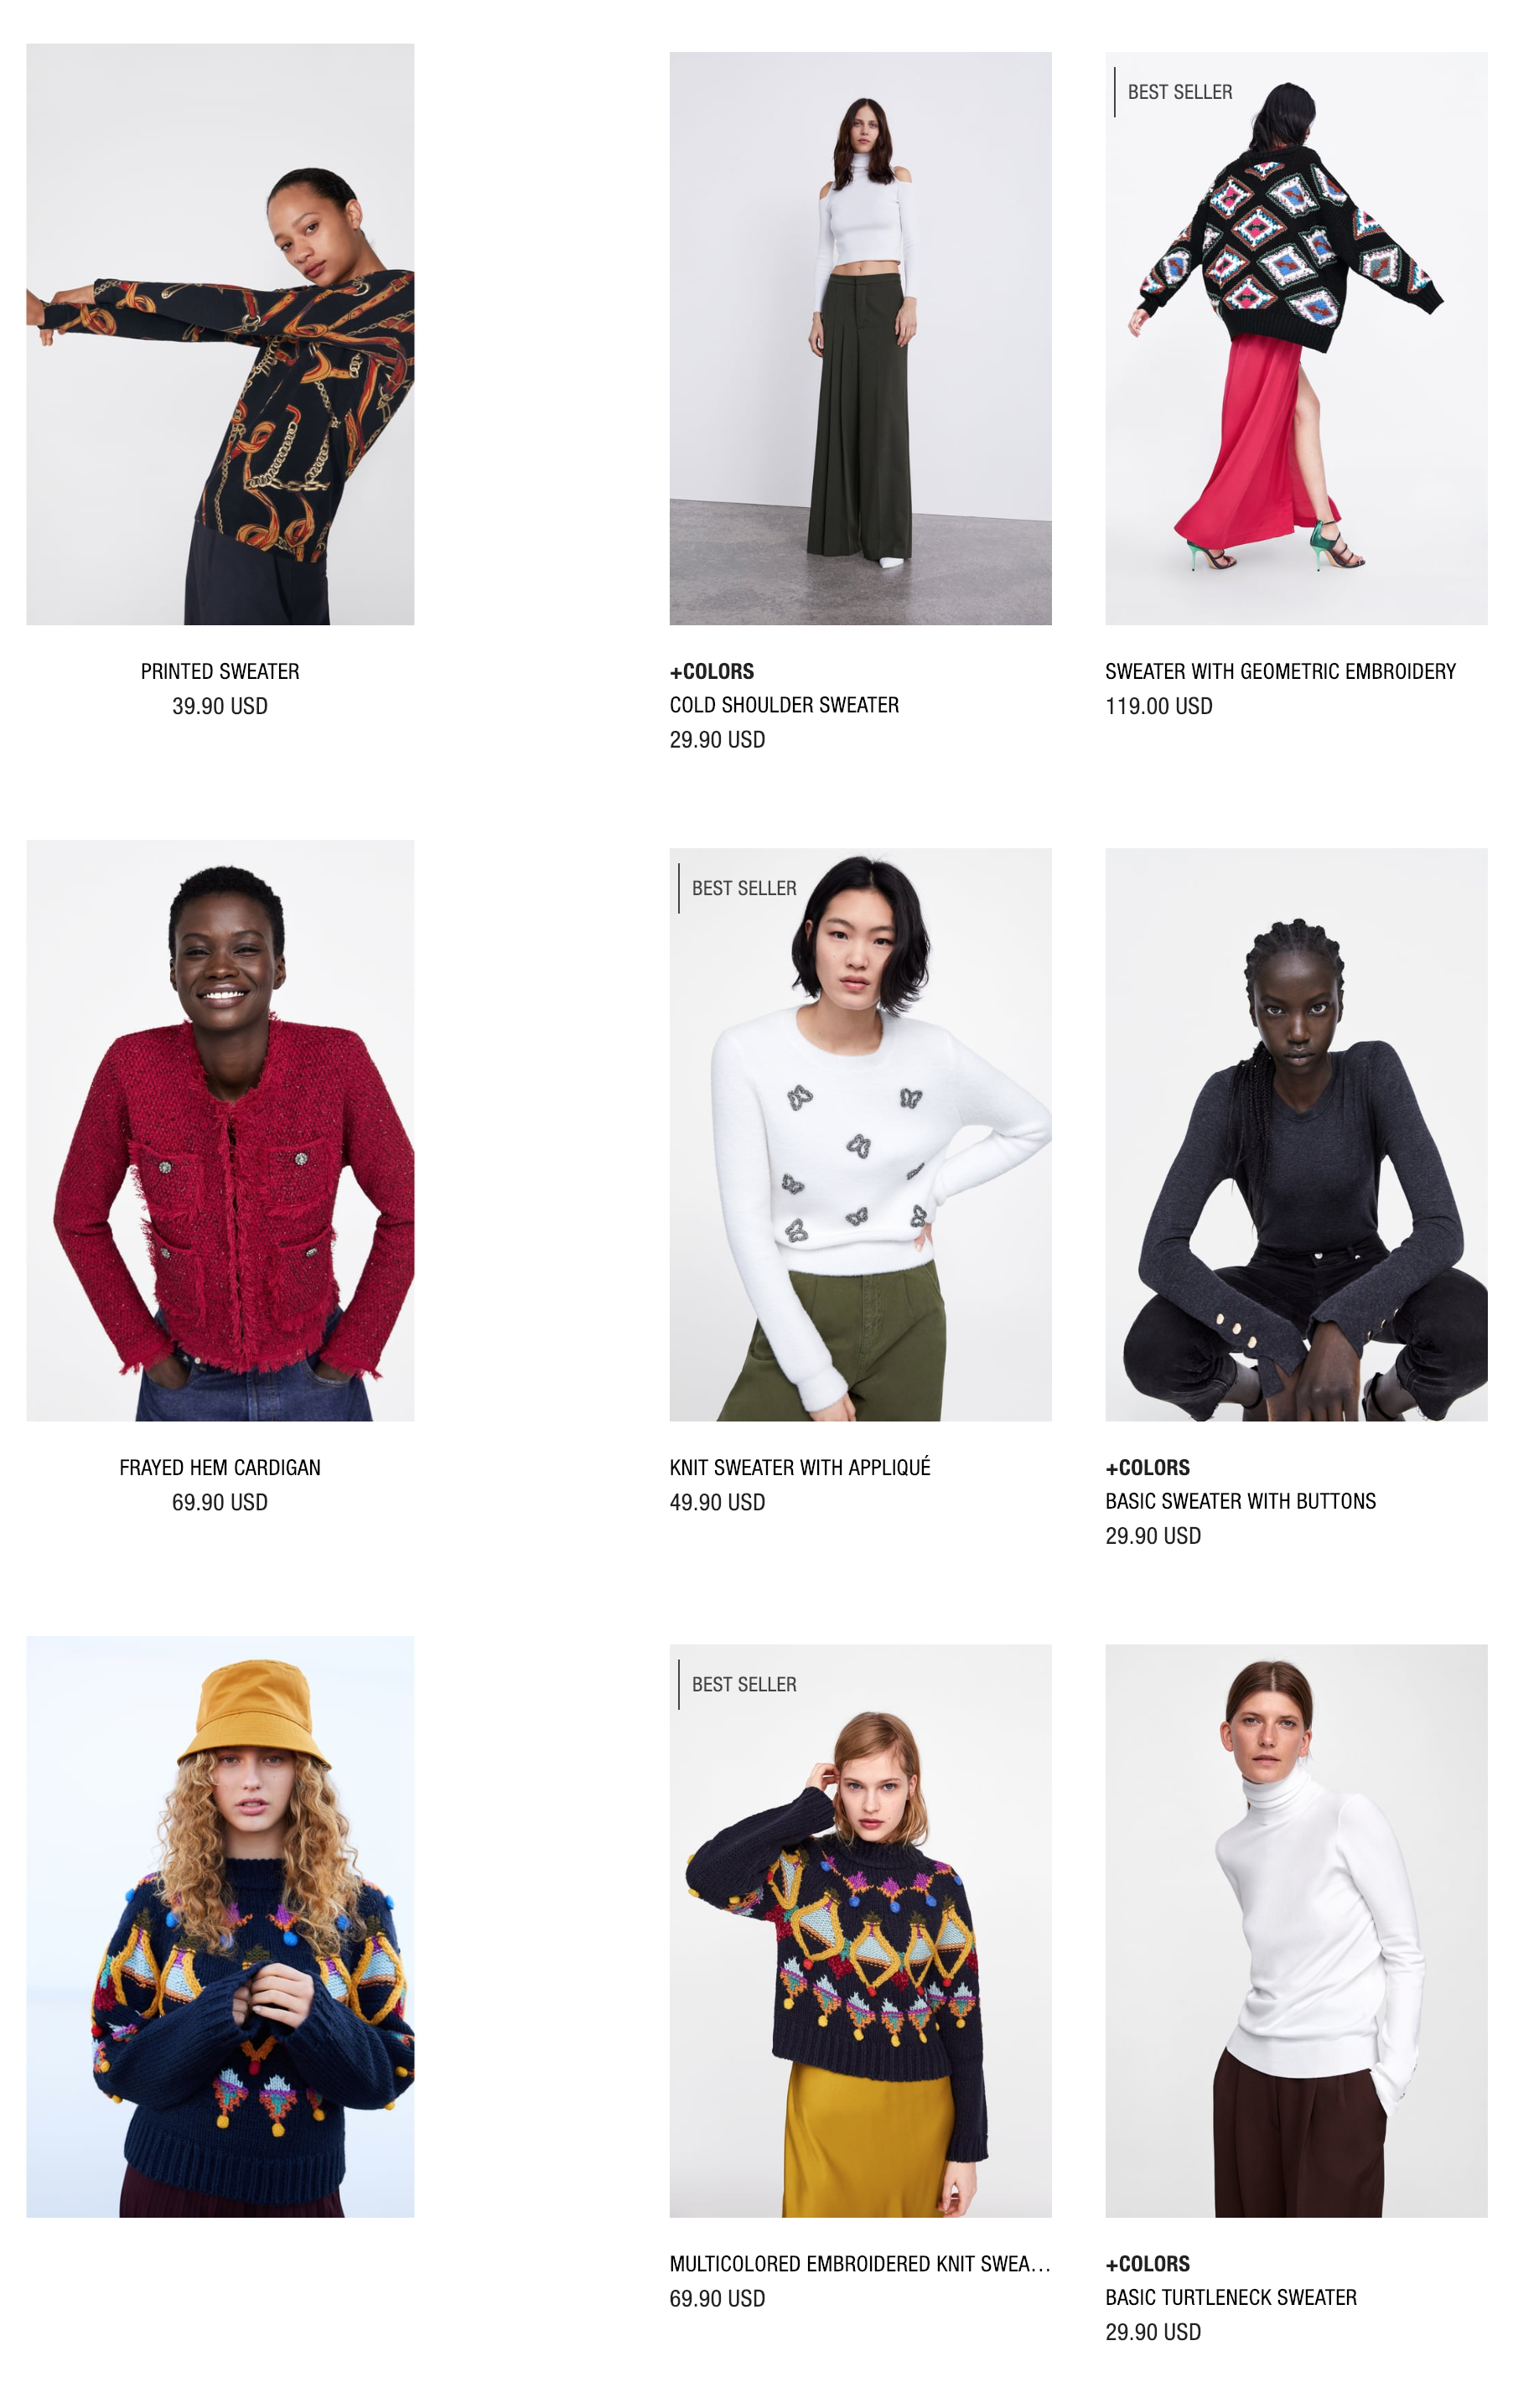 Diversity of models on Zara.com